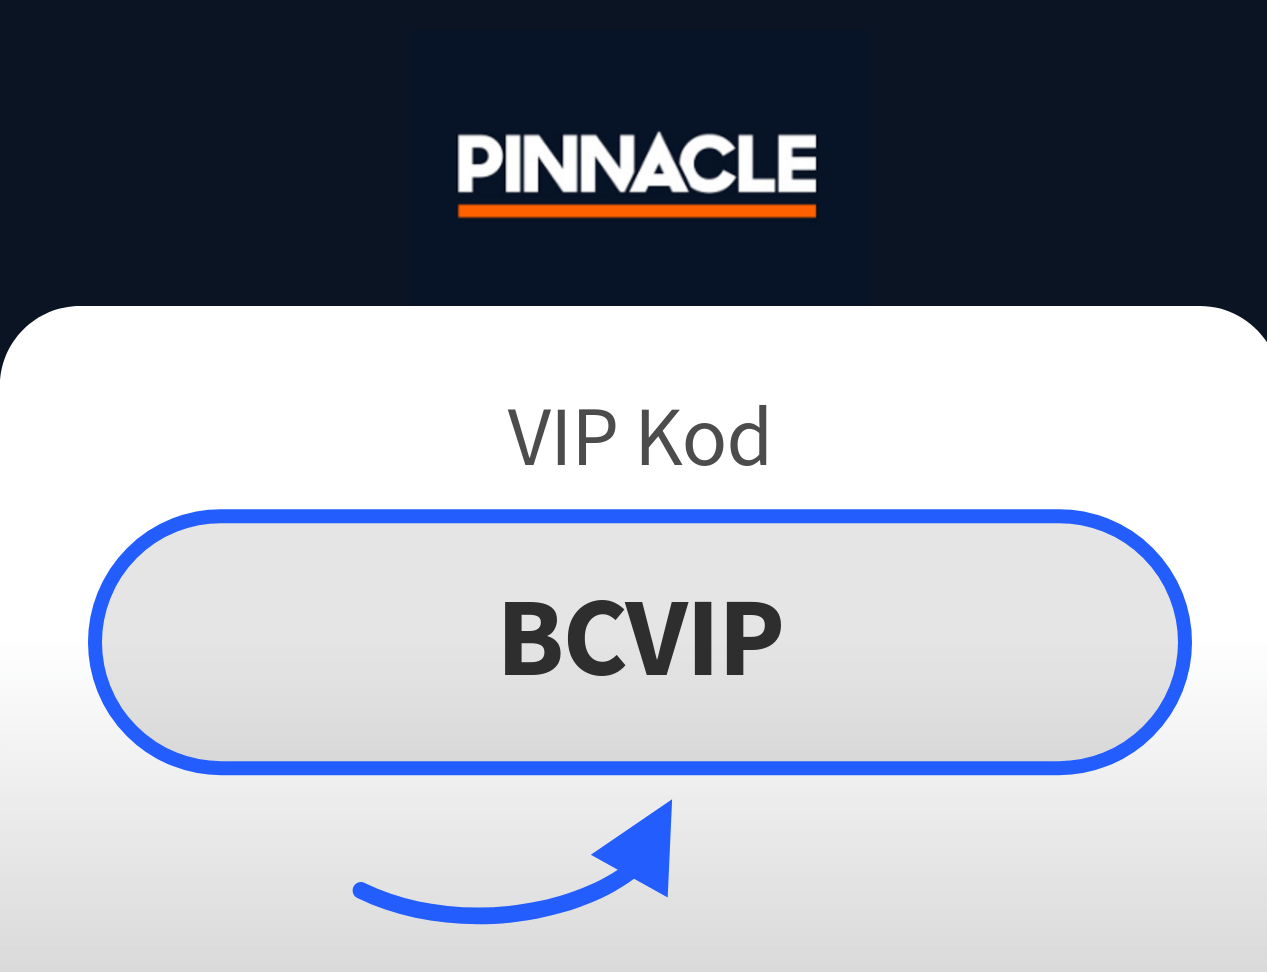 Pinnacle VIP Kod